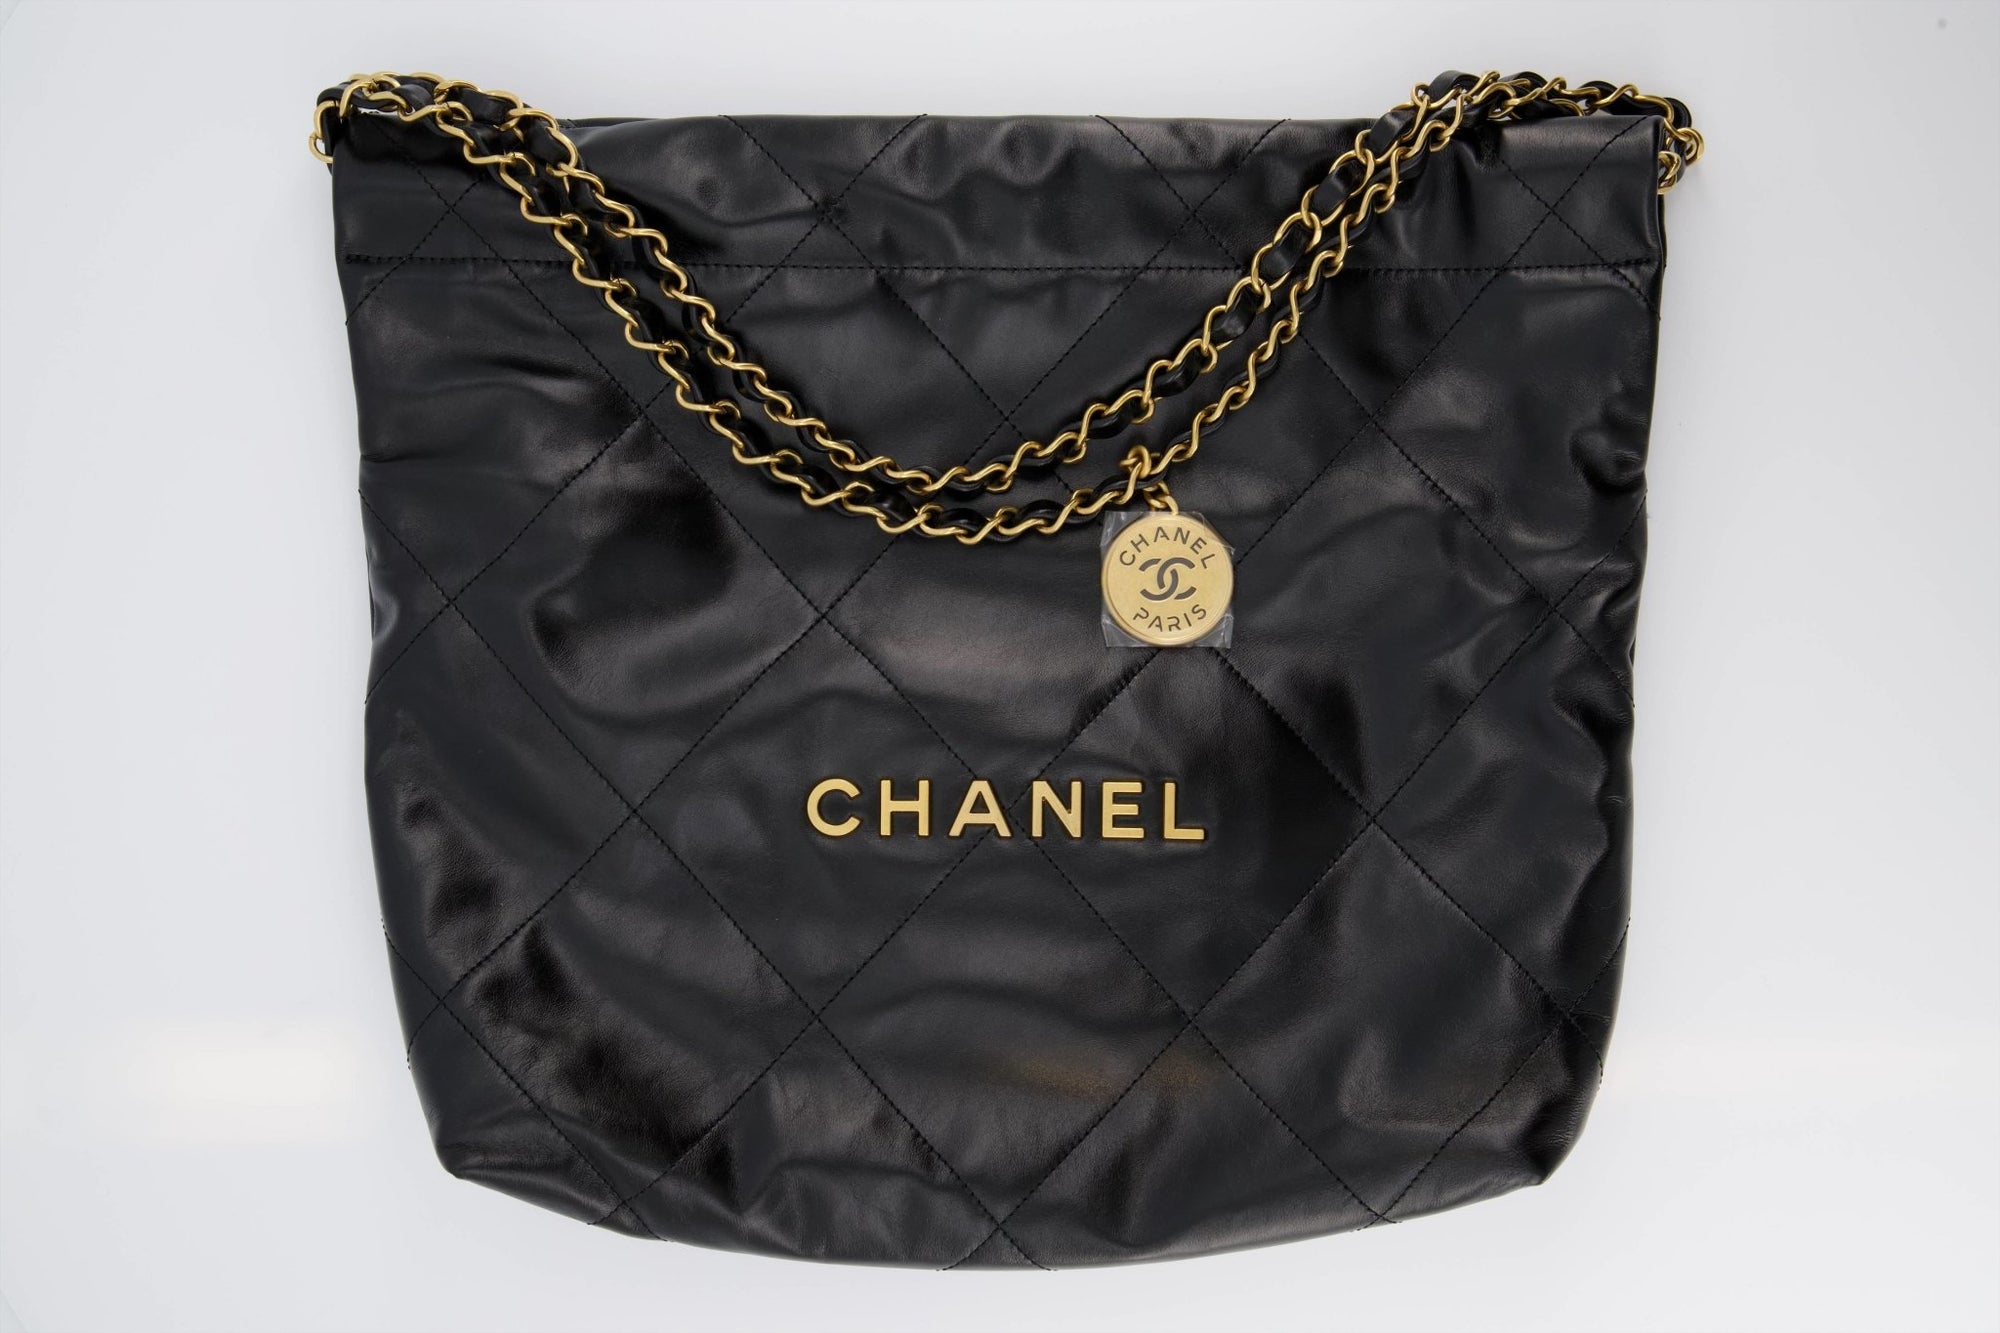 Chanel 22A Top handle rectangular mini bag green